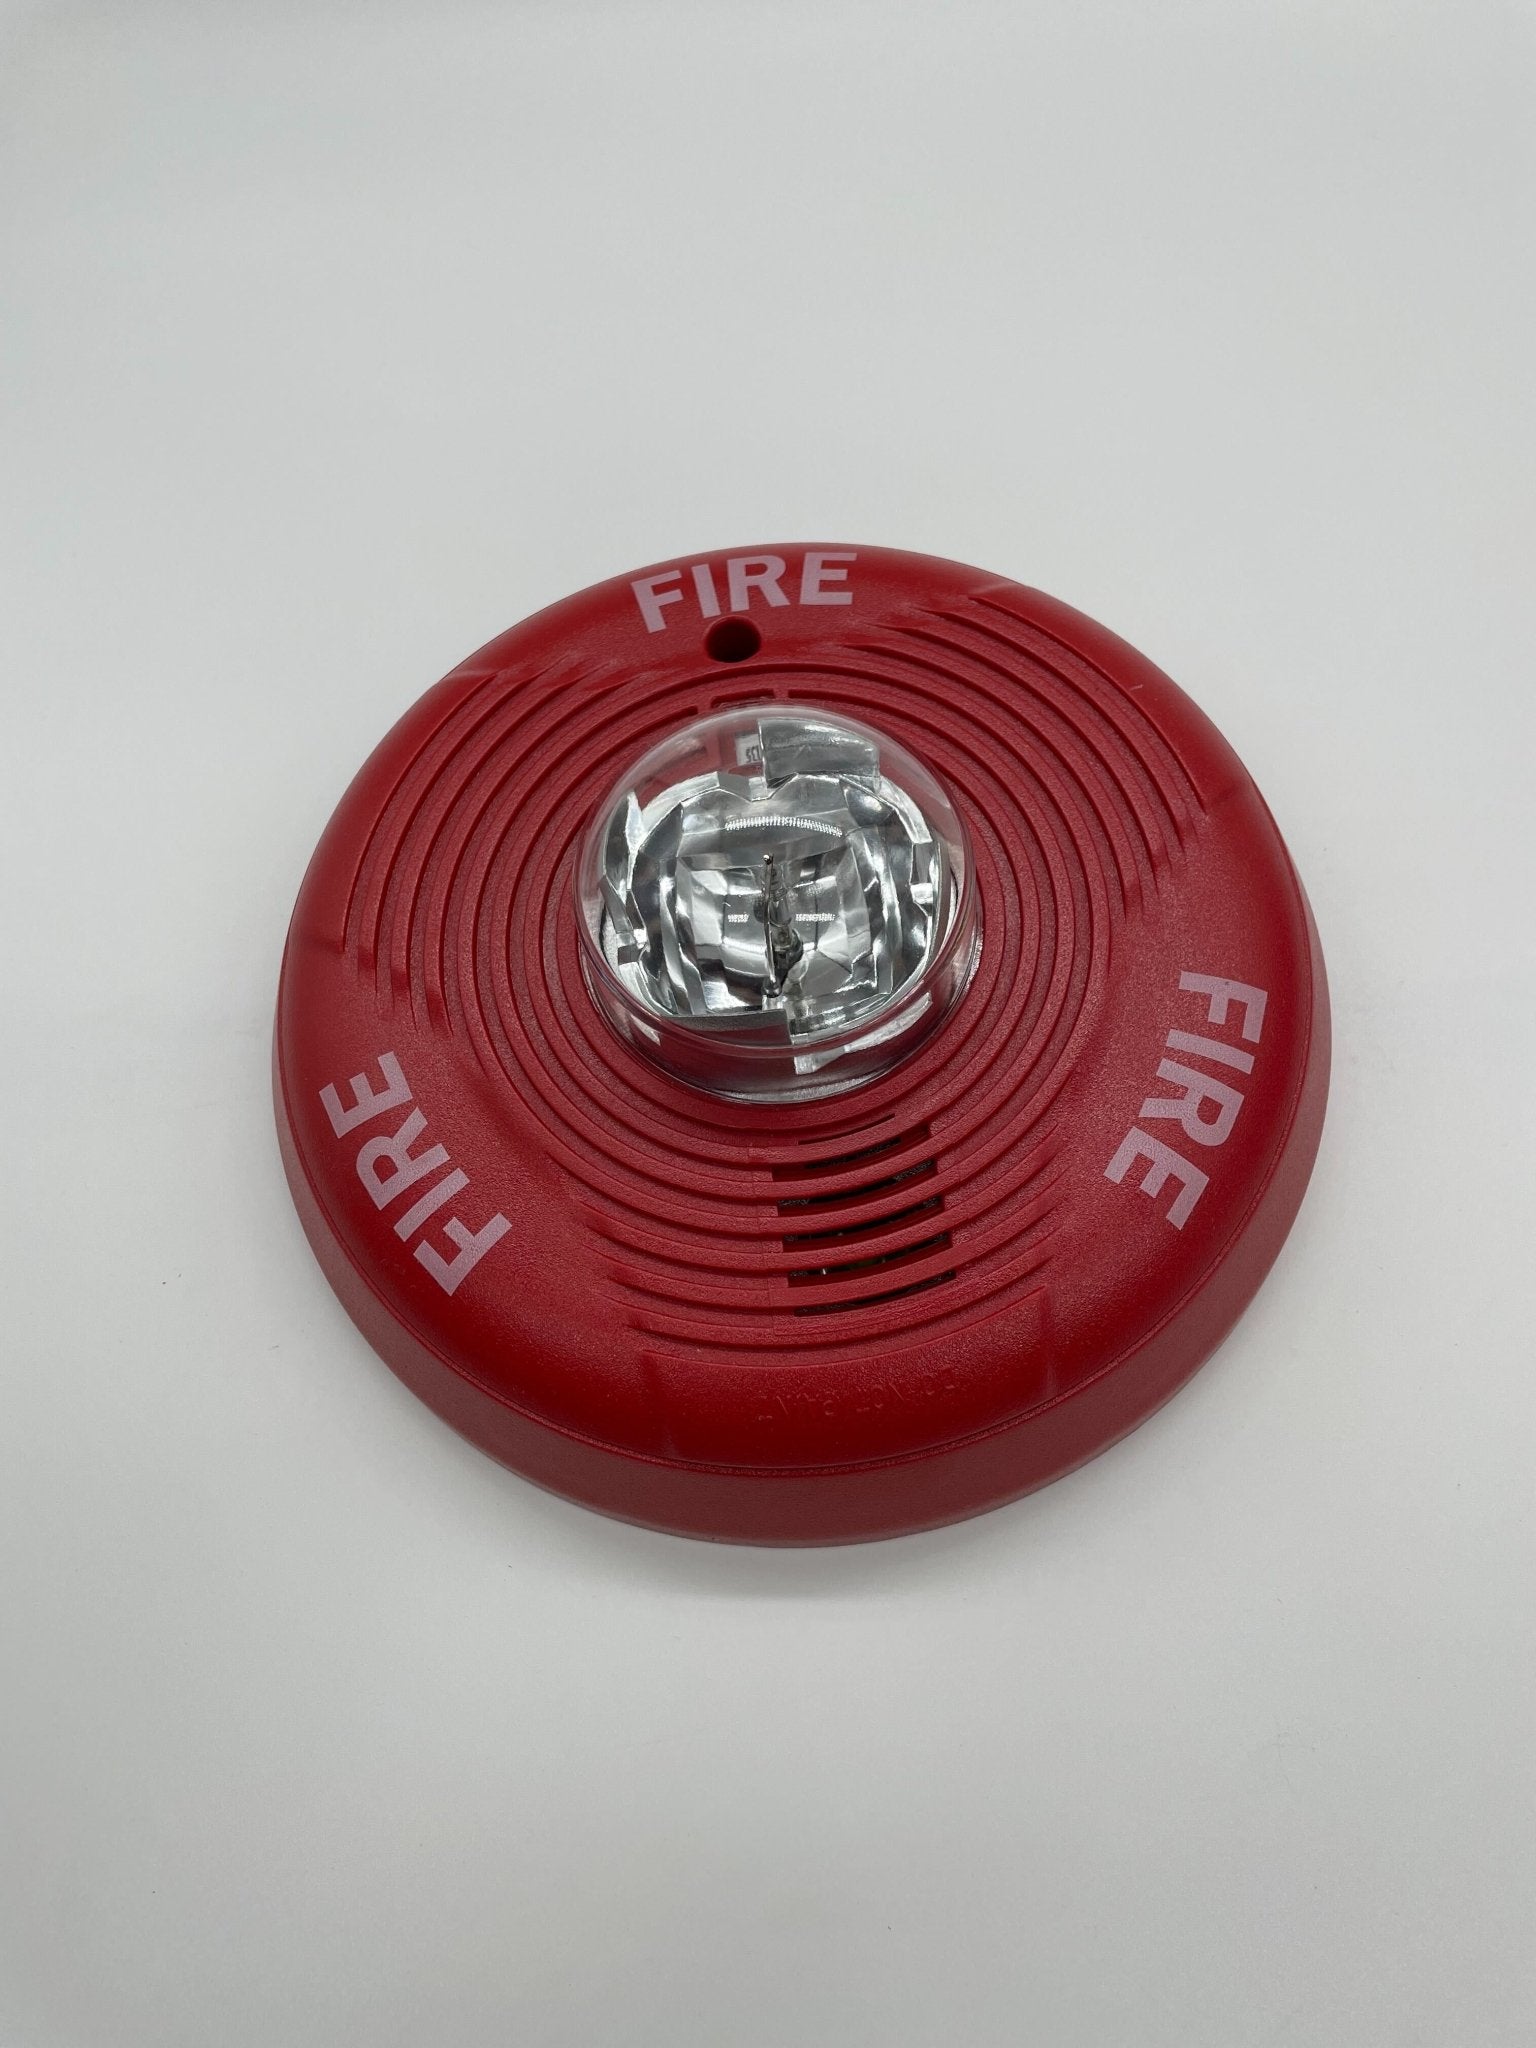 System Sensor PC2RHK - The Fire Alarm Supplier